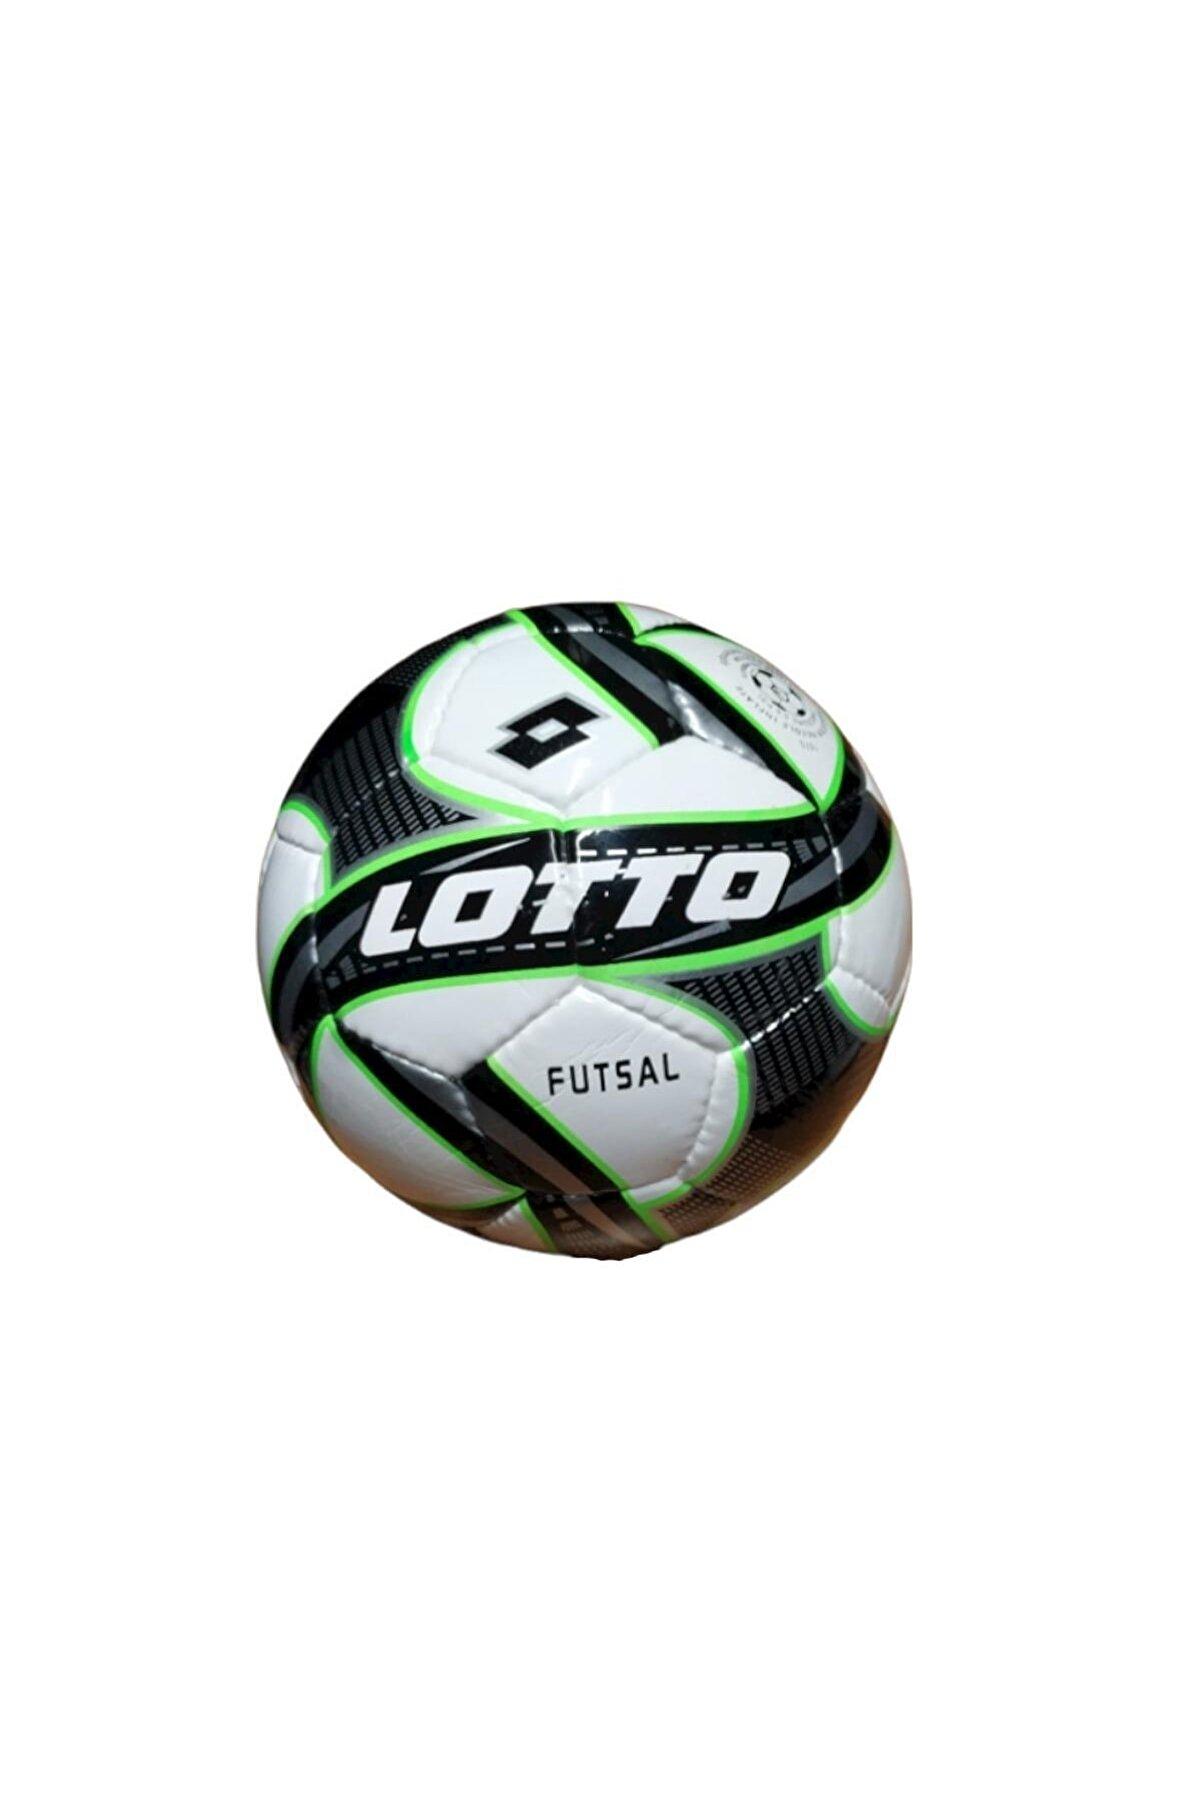 Lotto S62606 Futsal Topu, Salon Futbolu